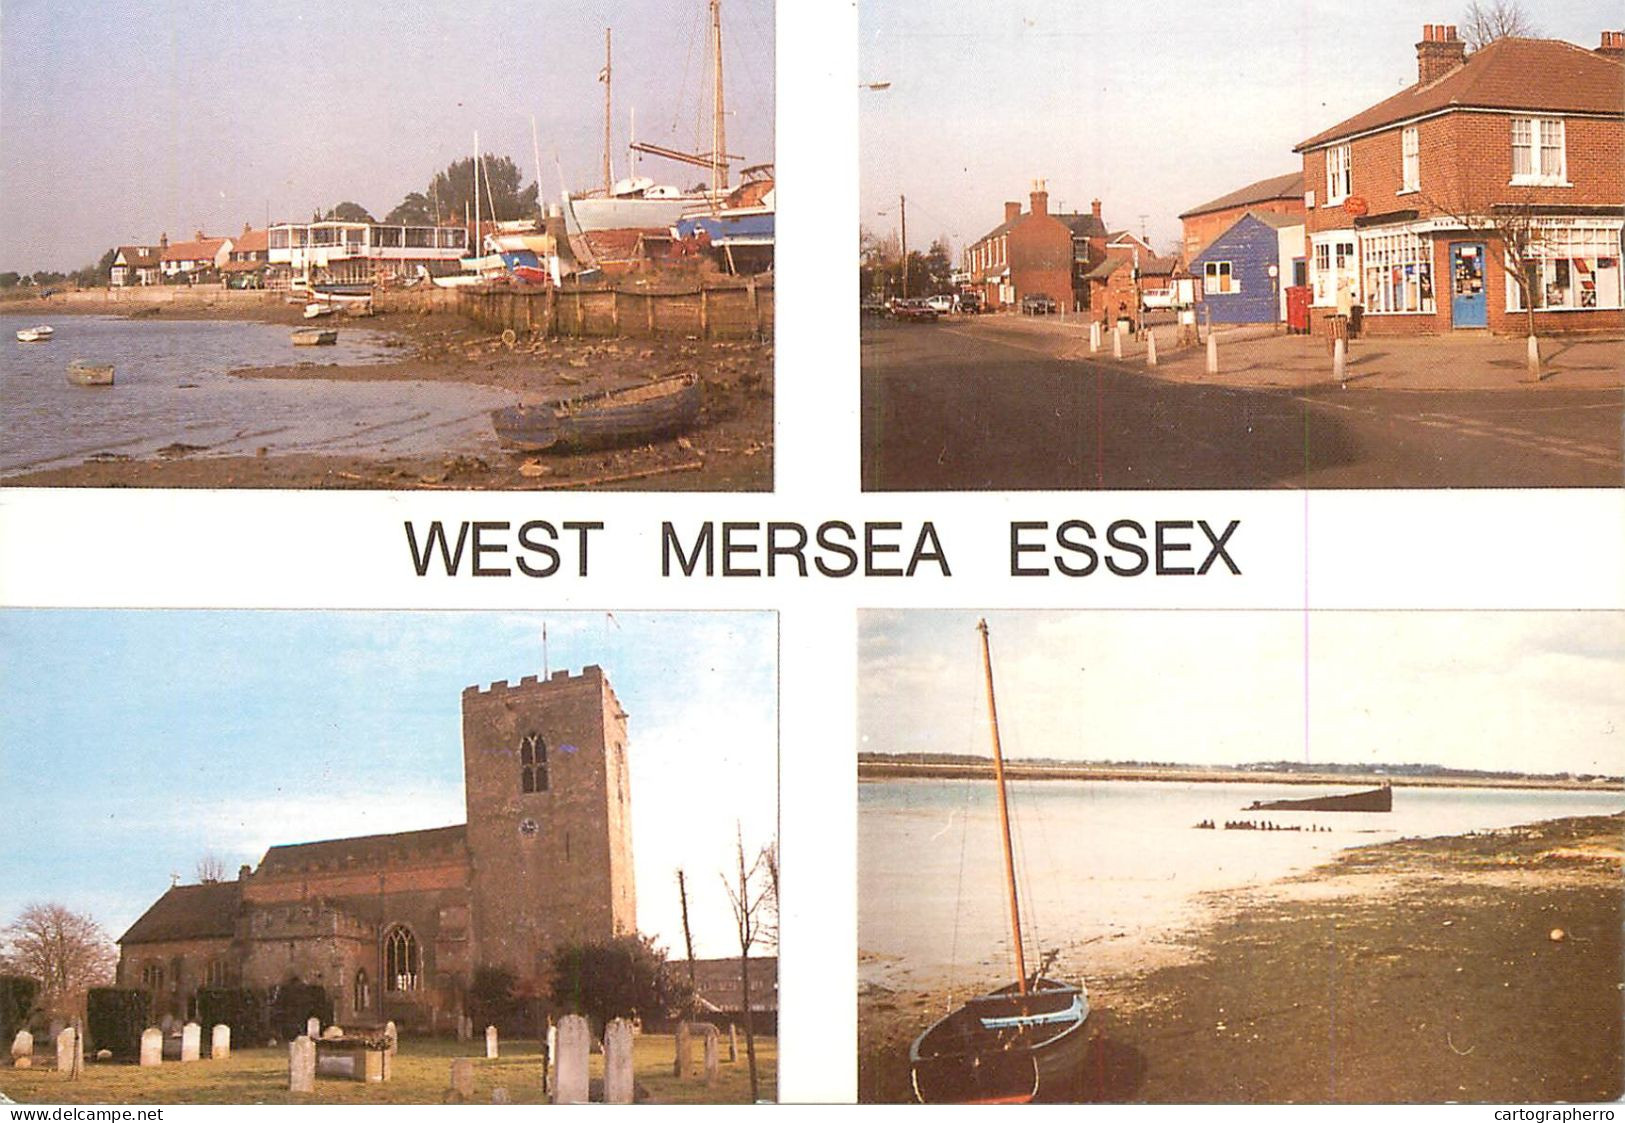 Navigation Sailing Vessels & Boats Themed Postcard West Mersea Essex - Sailing Vessels